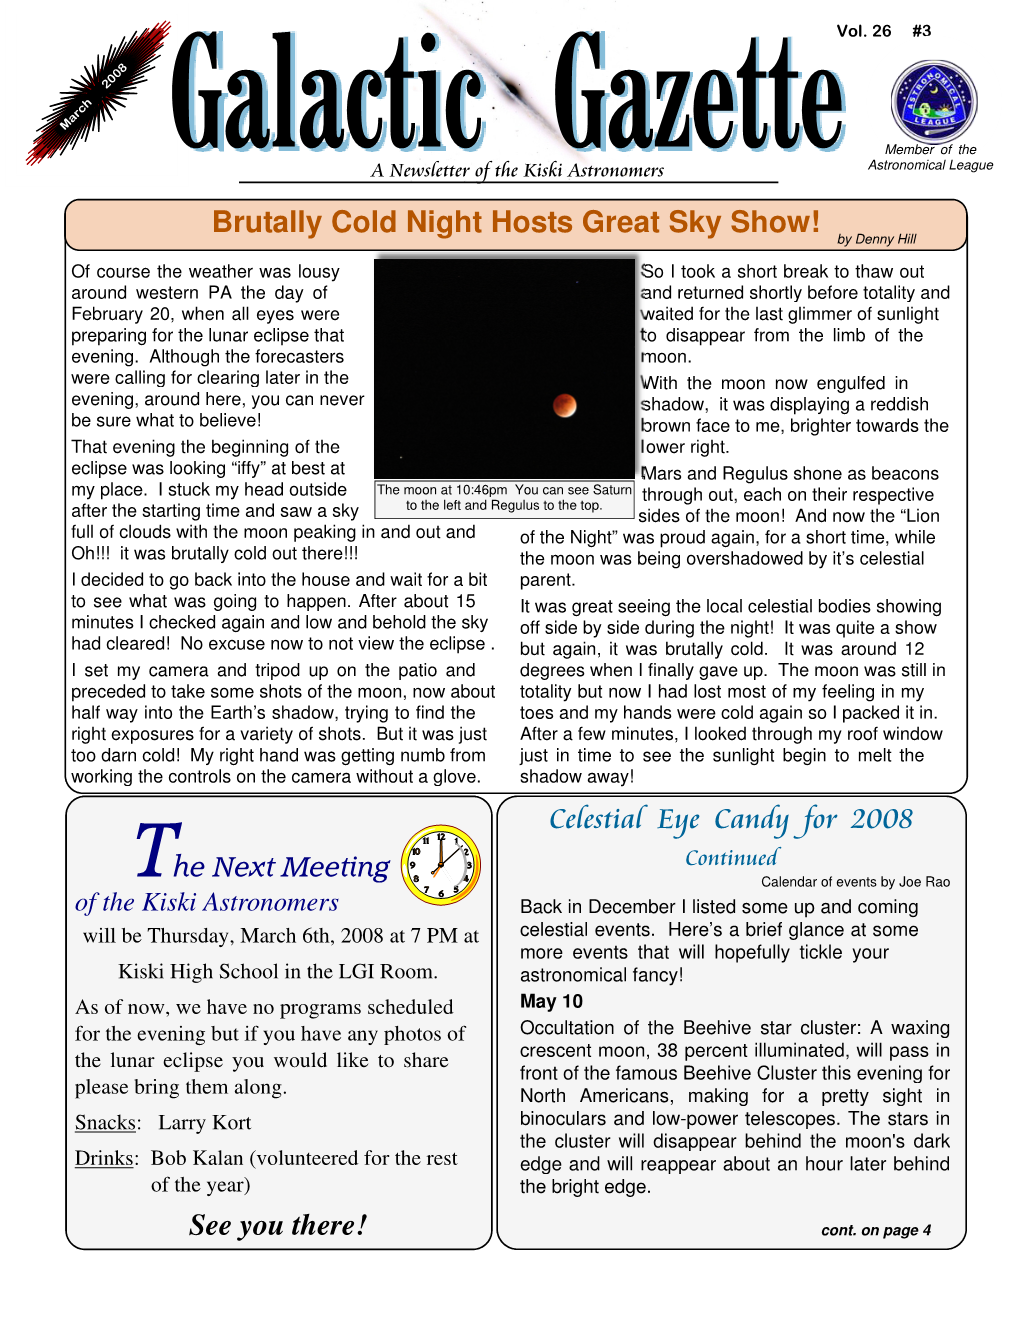 March 2008 Newsletter